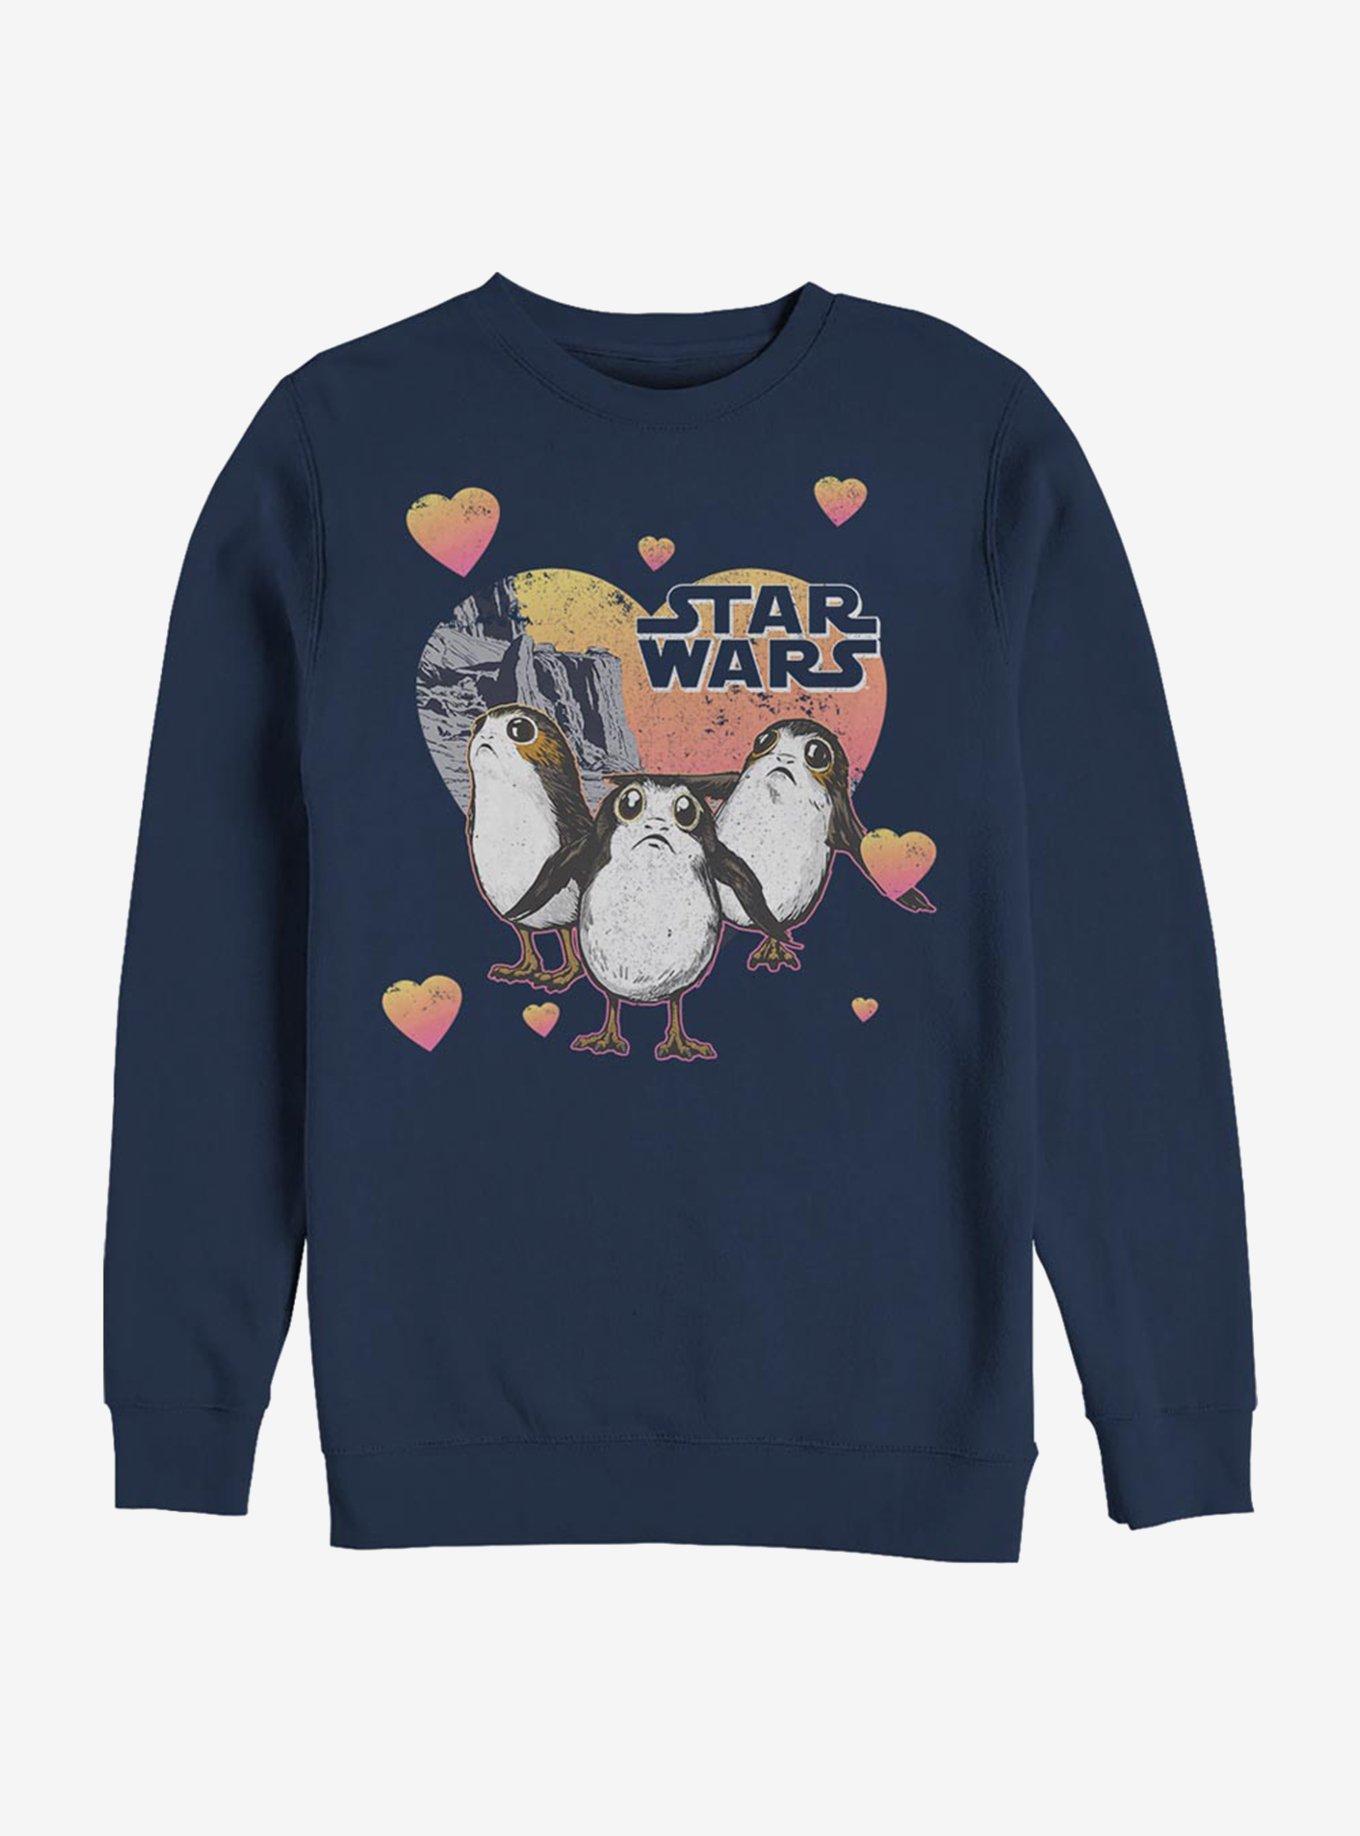 Star Wars Episode VIII The Last Jedi Porg Hearts Crew Sweatshirt, NAVY, hi-res